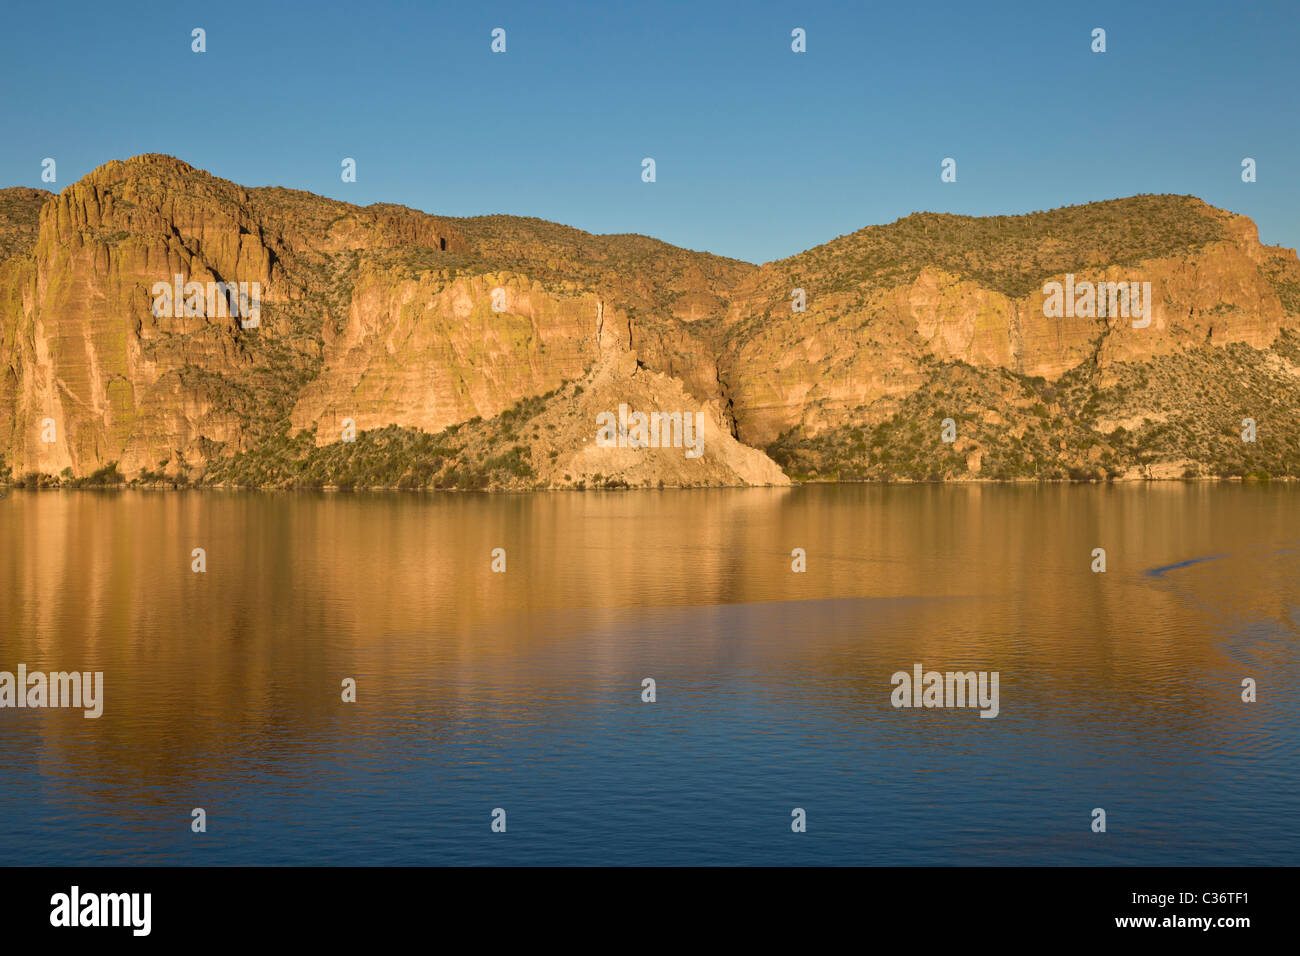 Mountains reflected in the Theodore Roosevelt Lake near Phoeniz Arizona, USA. Stock Photo